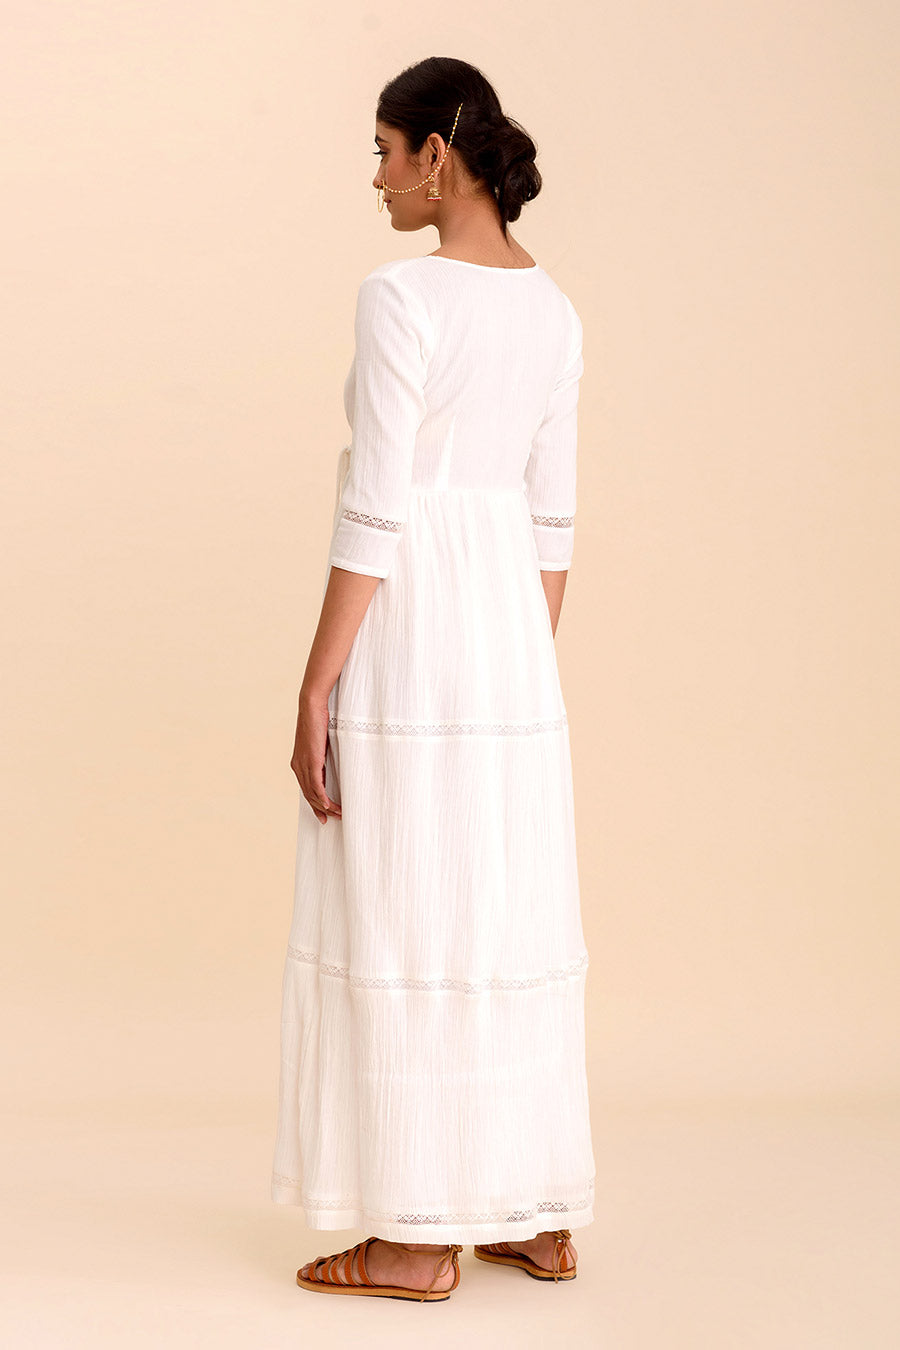 JALMAY - A Line White Maxi Dress